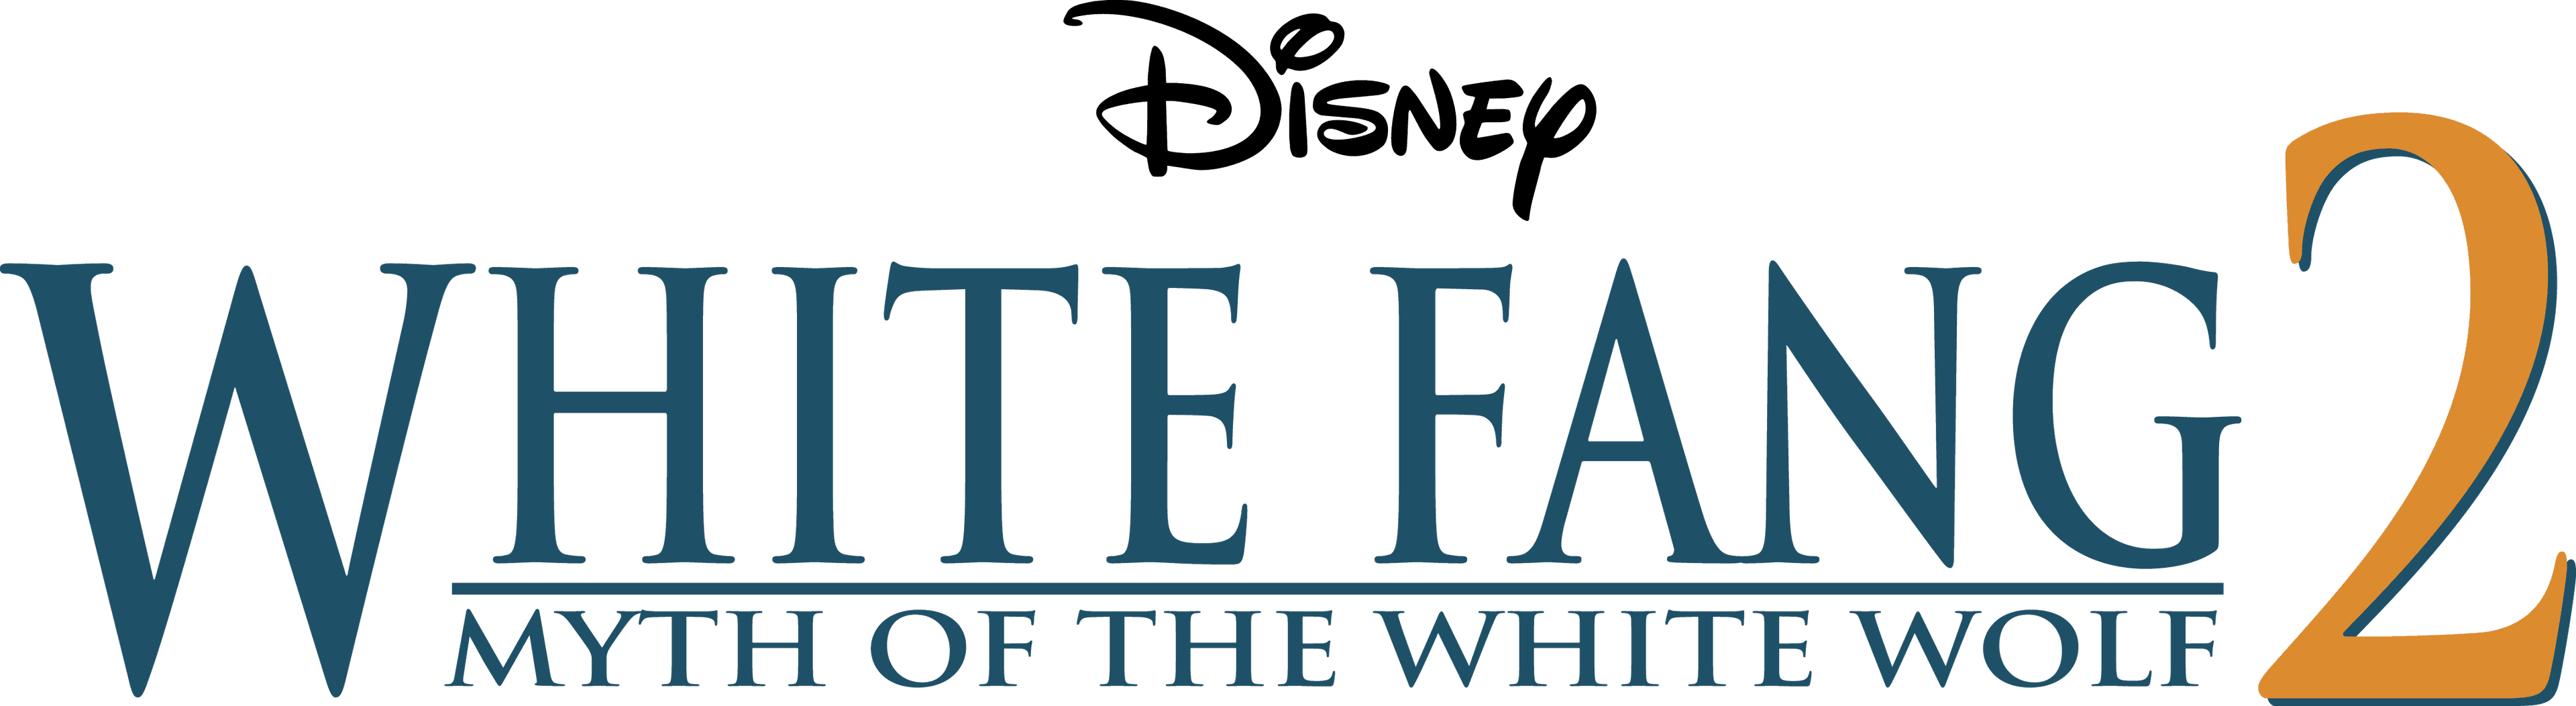 White Fang 2: Myth of the White Wolf logo